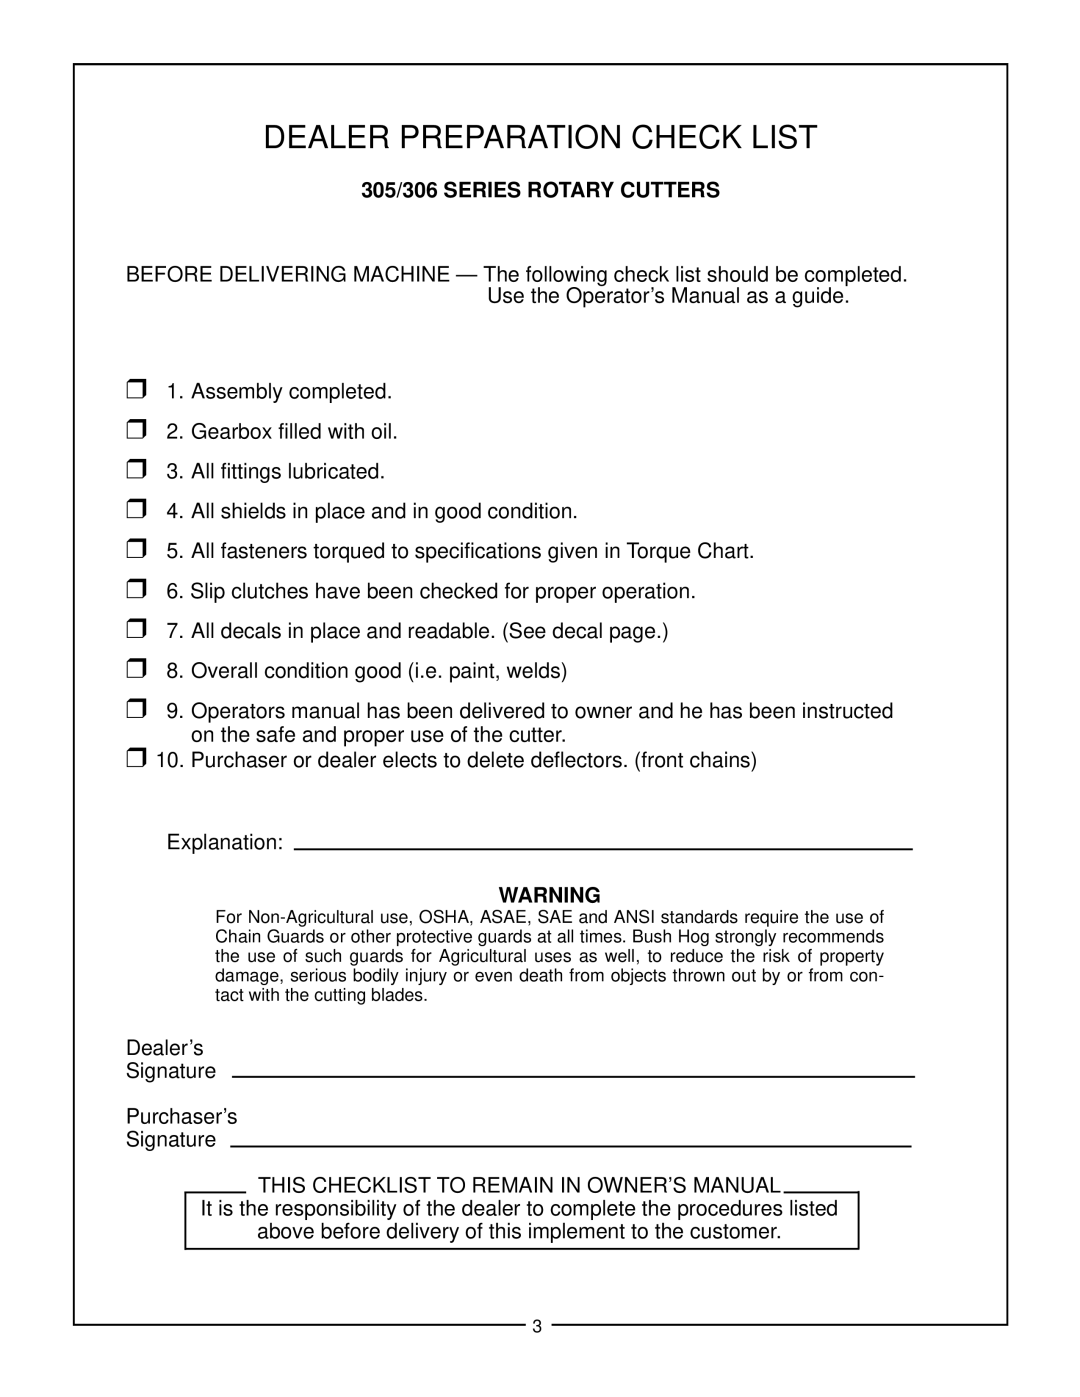 Bush Hog manual 305/306 SERIES ROTARY CUTTERS, Dealer Preparation Check List 